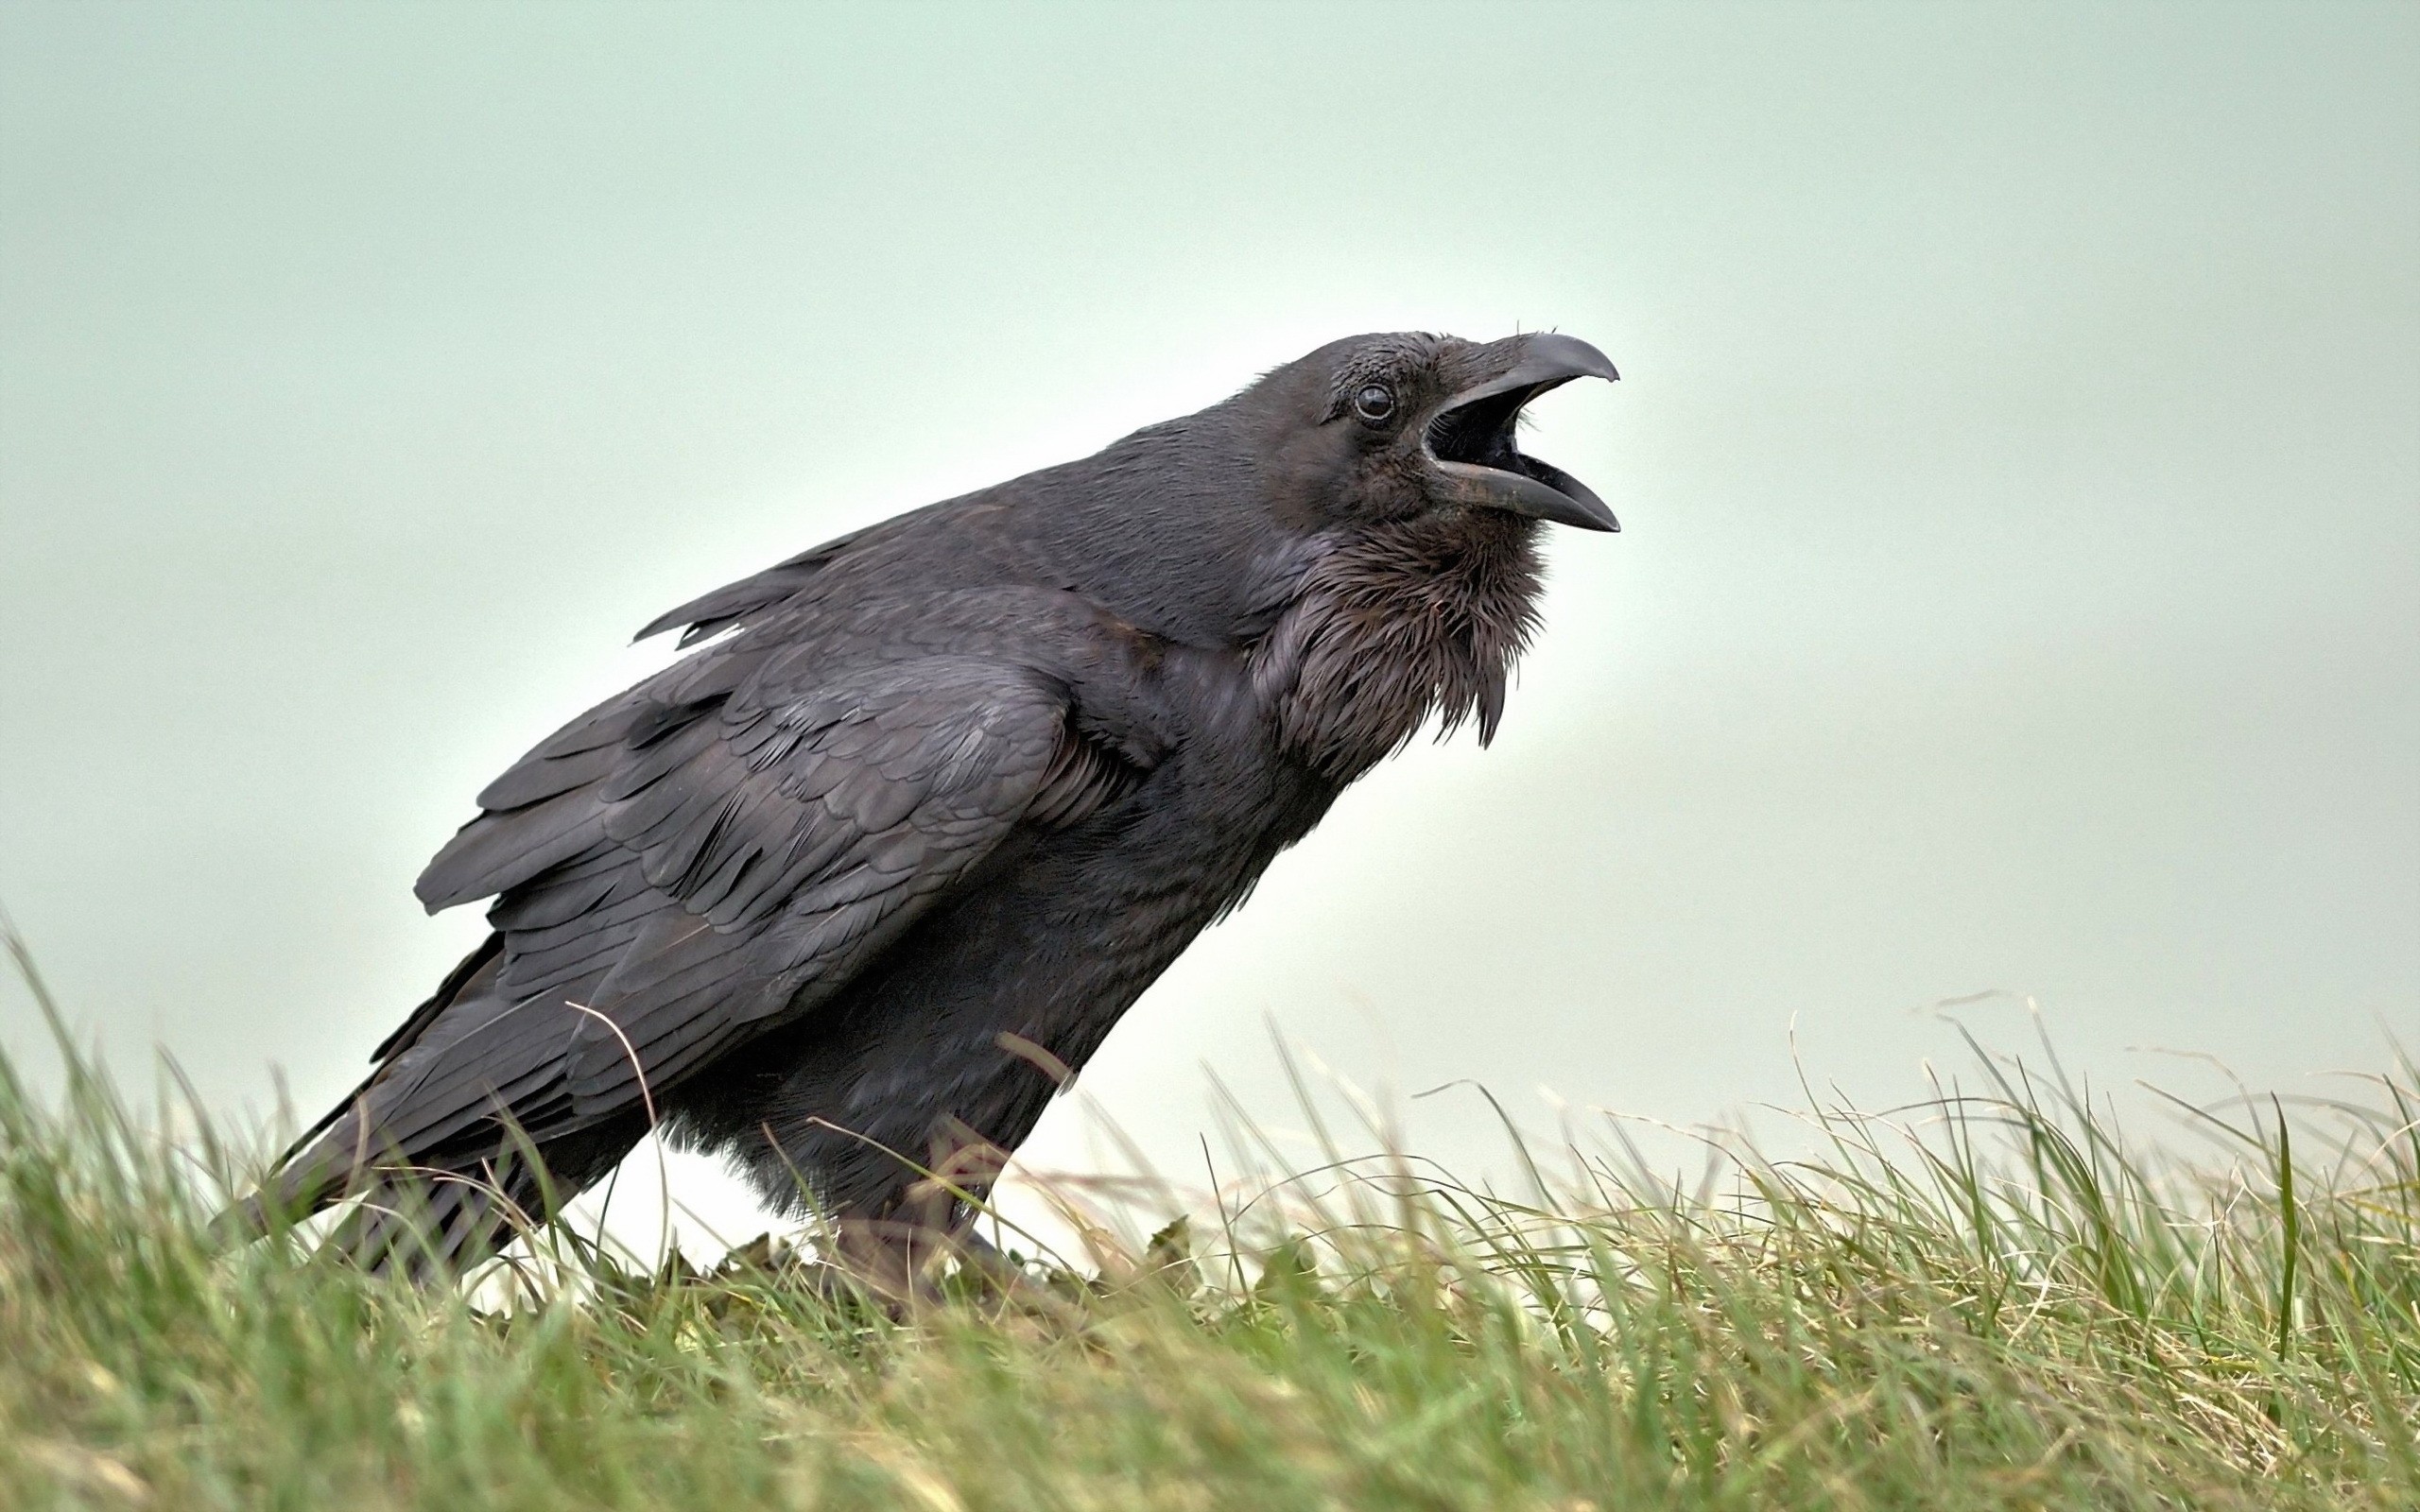 General 2560x1600 animals birds raven grass outdoors nature